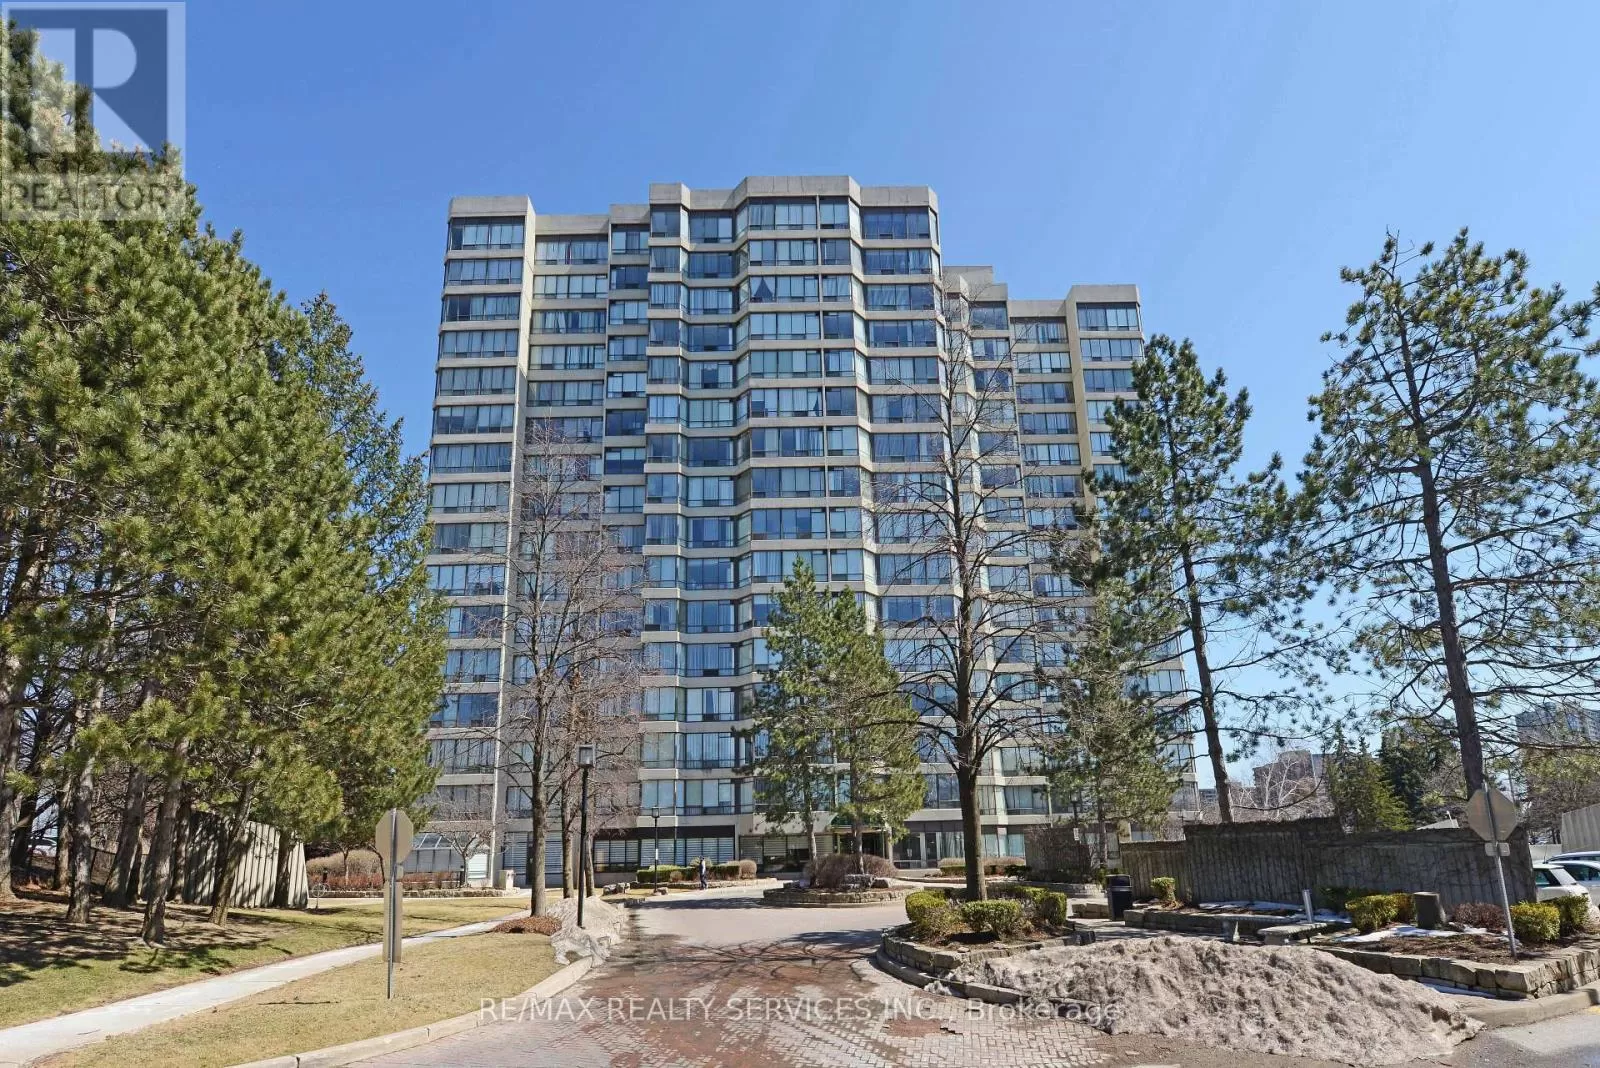 Apartment for rent: 1609 - 26 Hanover Road, Brampton, Ontario L6S 4T2